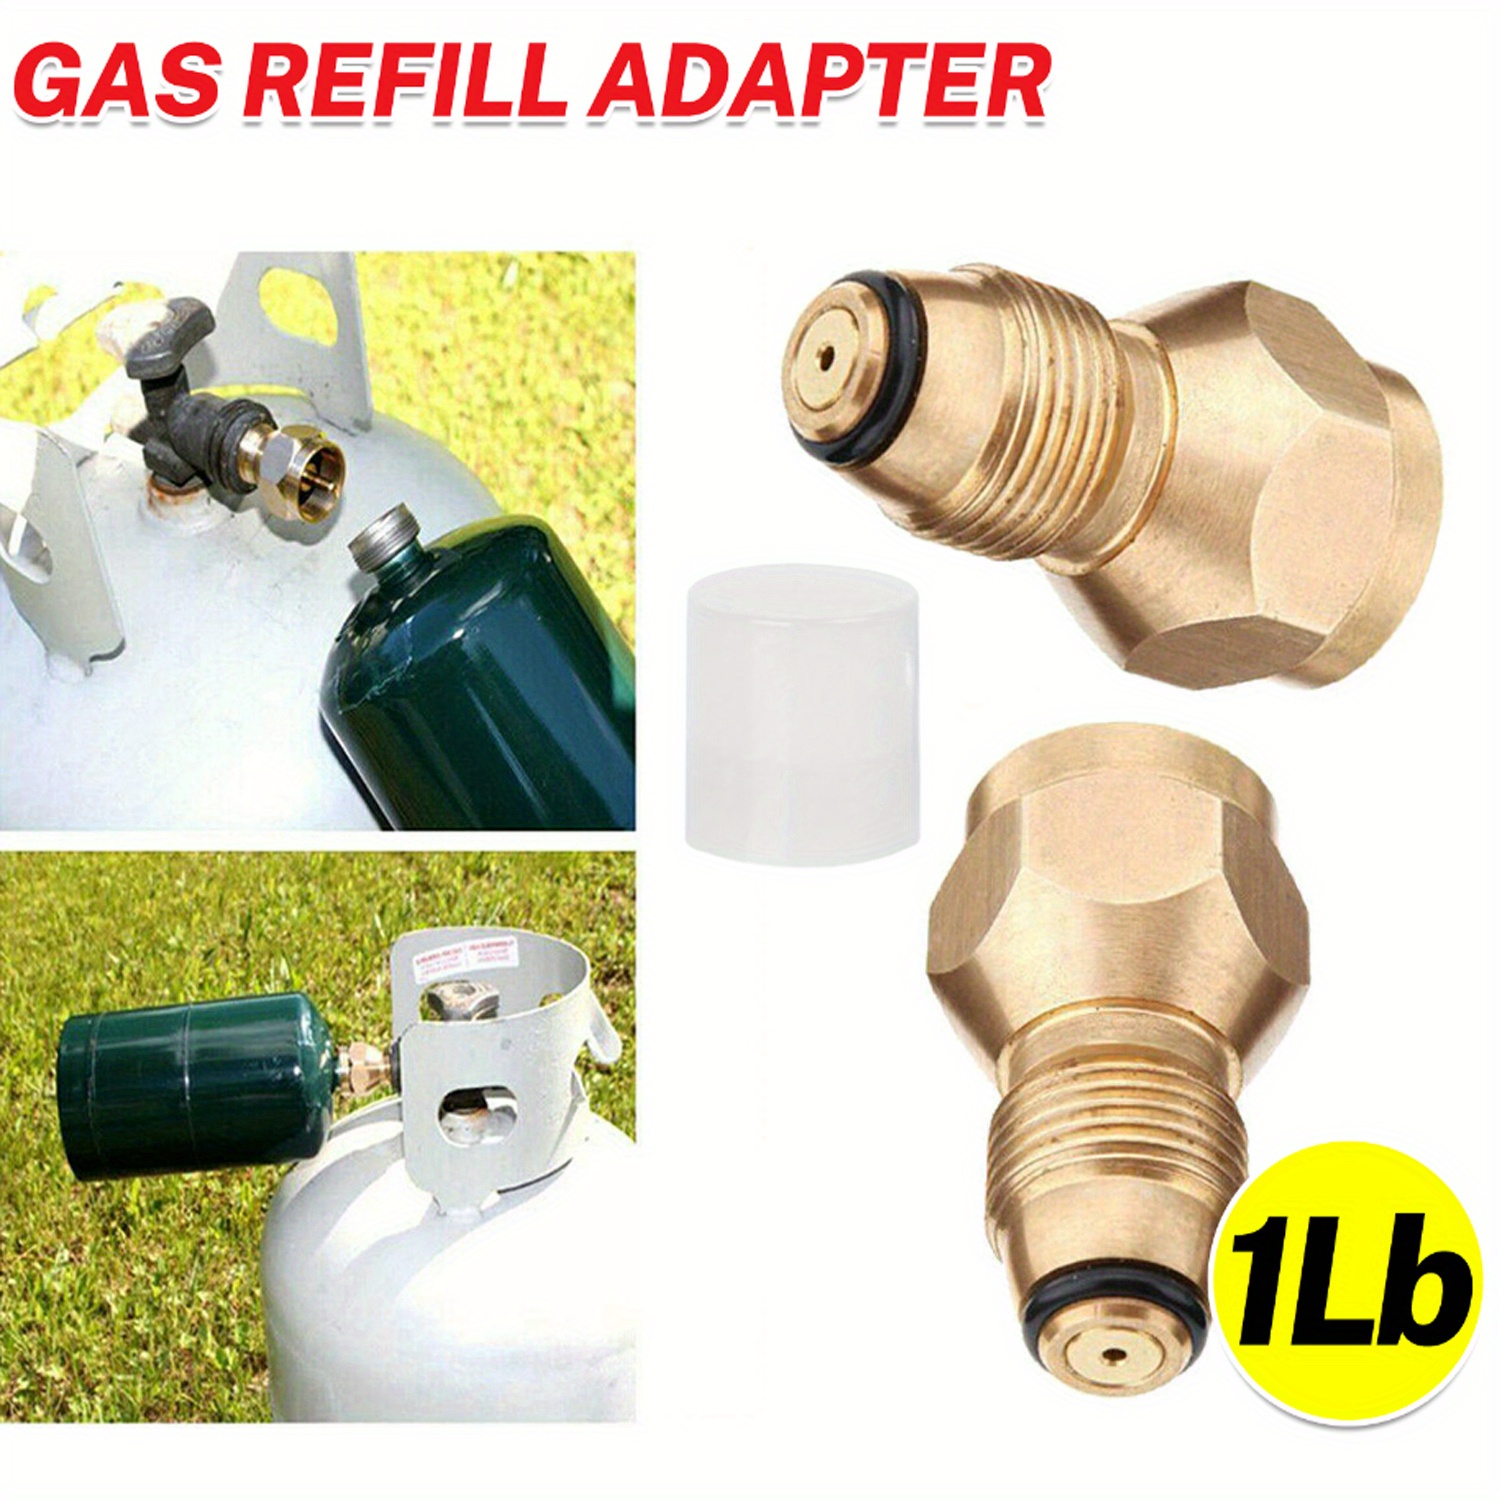 Butane Lighter Gas Refill Adapter, 7pcs/Set Convenient and Durable